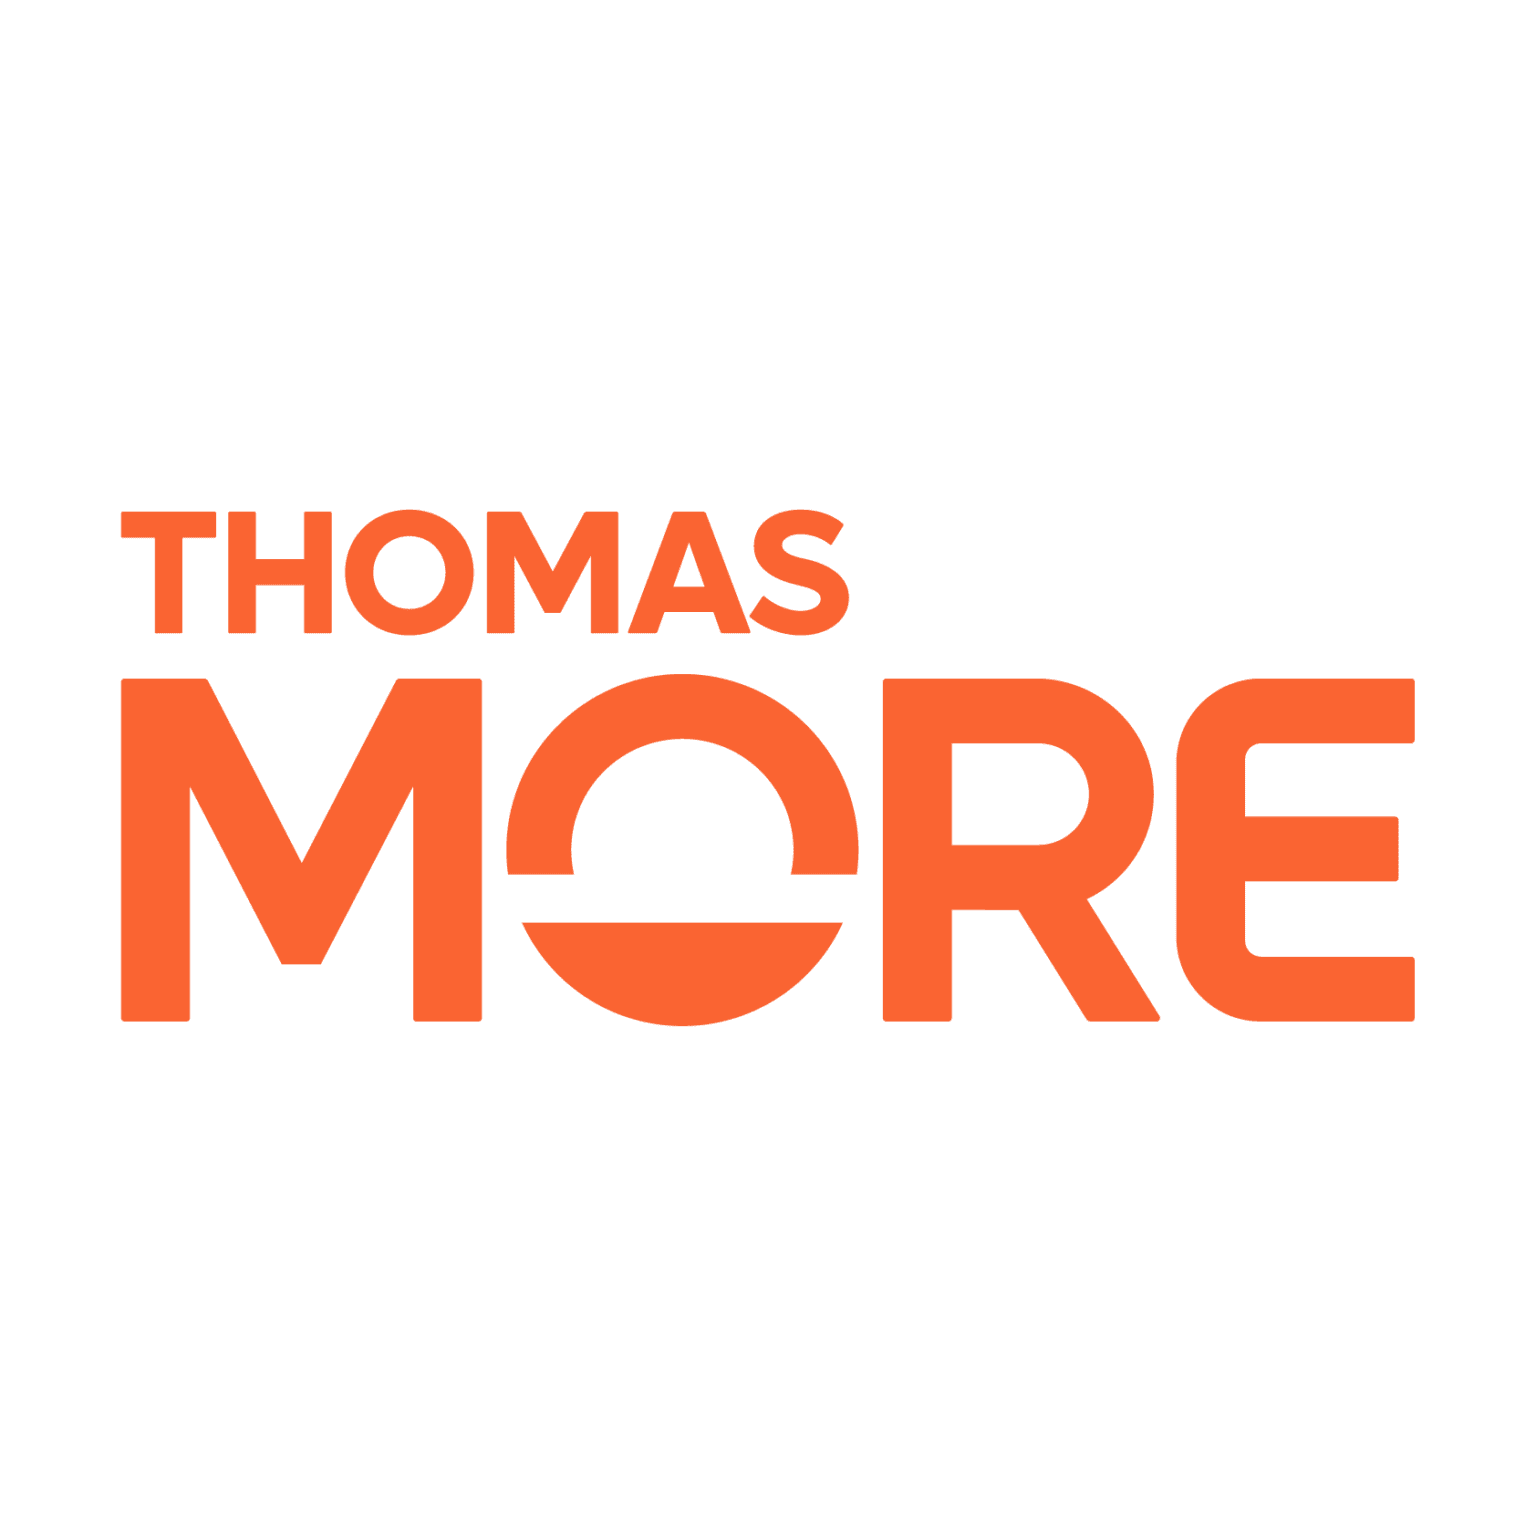 transparent-thomas-more-logo-1536x1536.png